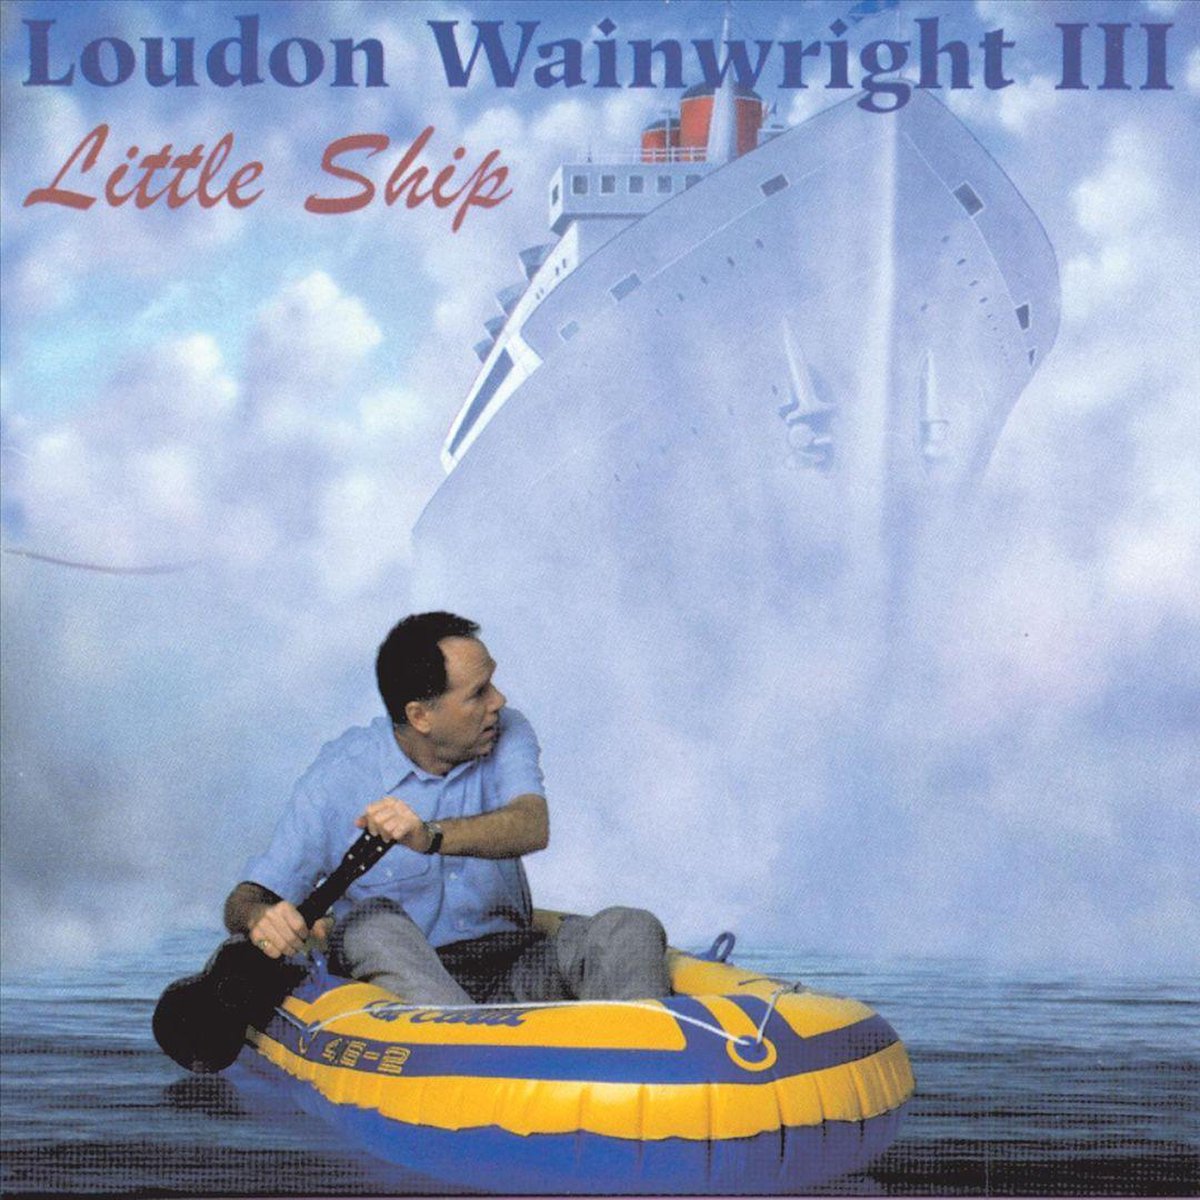 Little Ship - Loudon Wainwright Iii